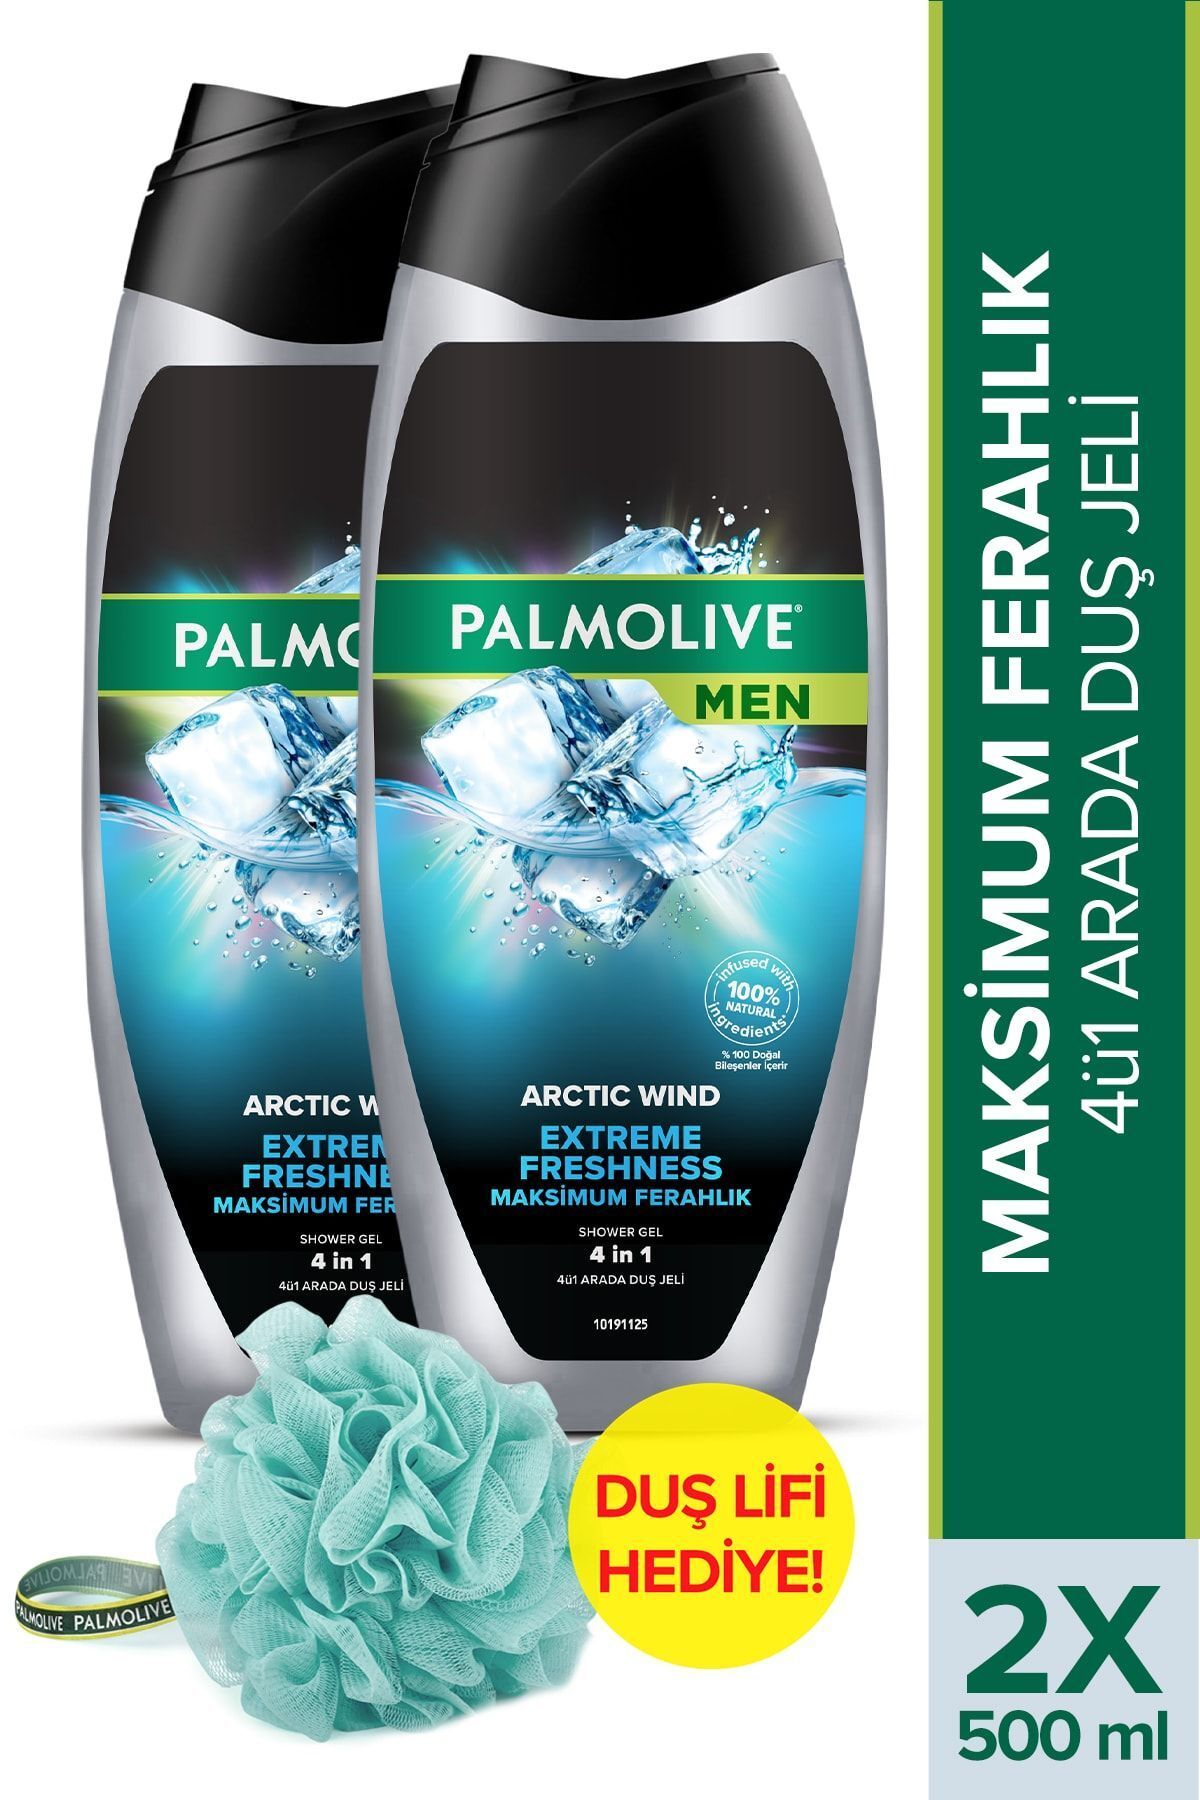 Palmolive Men Extreme Freshness 4ü1 Arada Erkek Duş Jeli ve Şampuan 500 ml x2 Adet + Duş Lifi